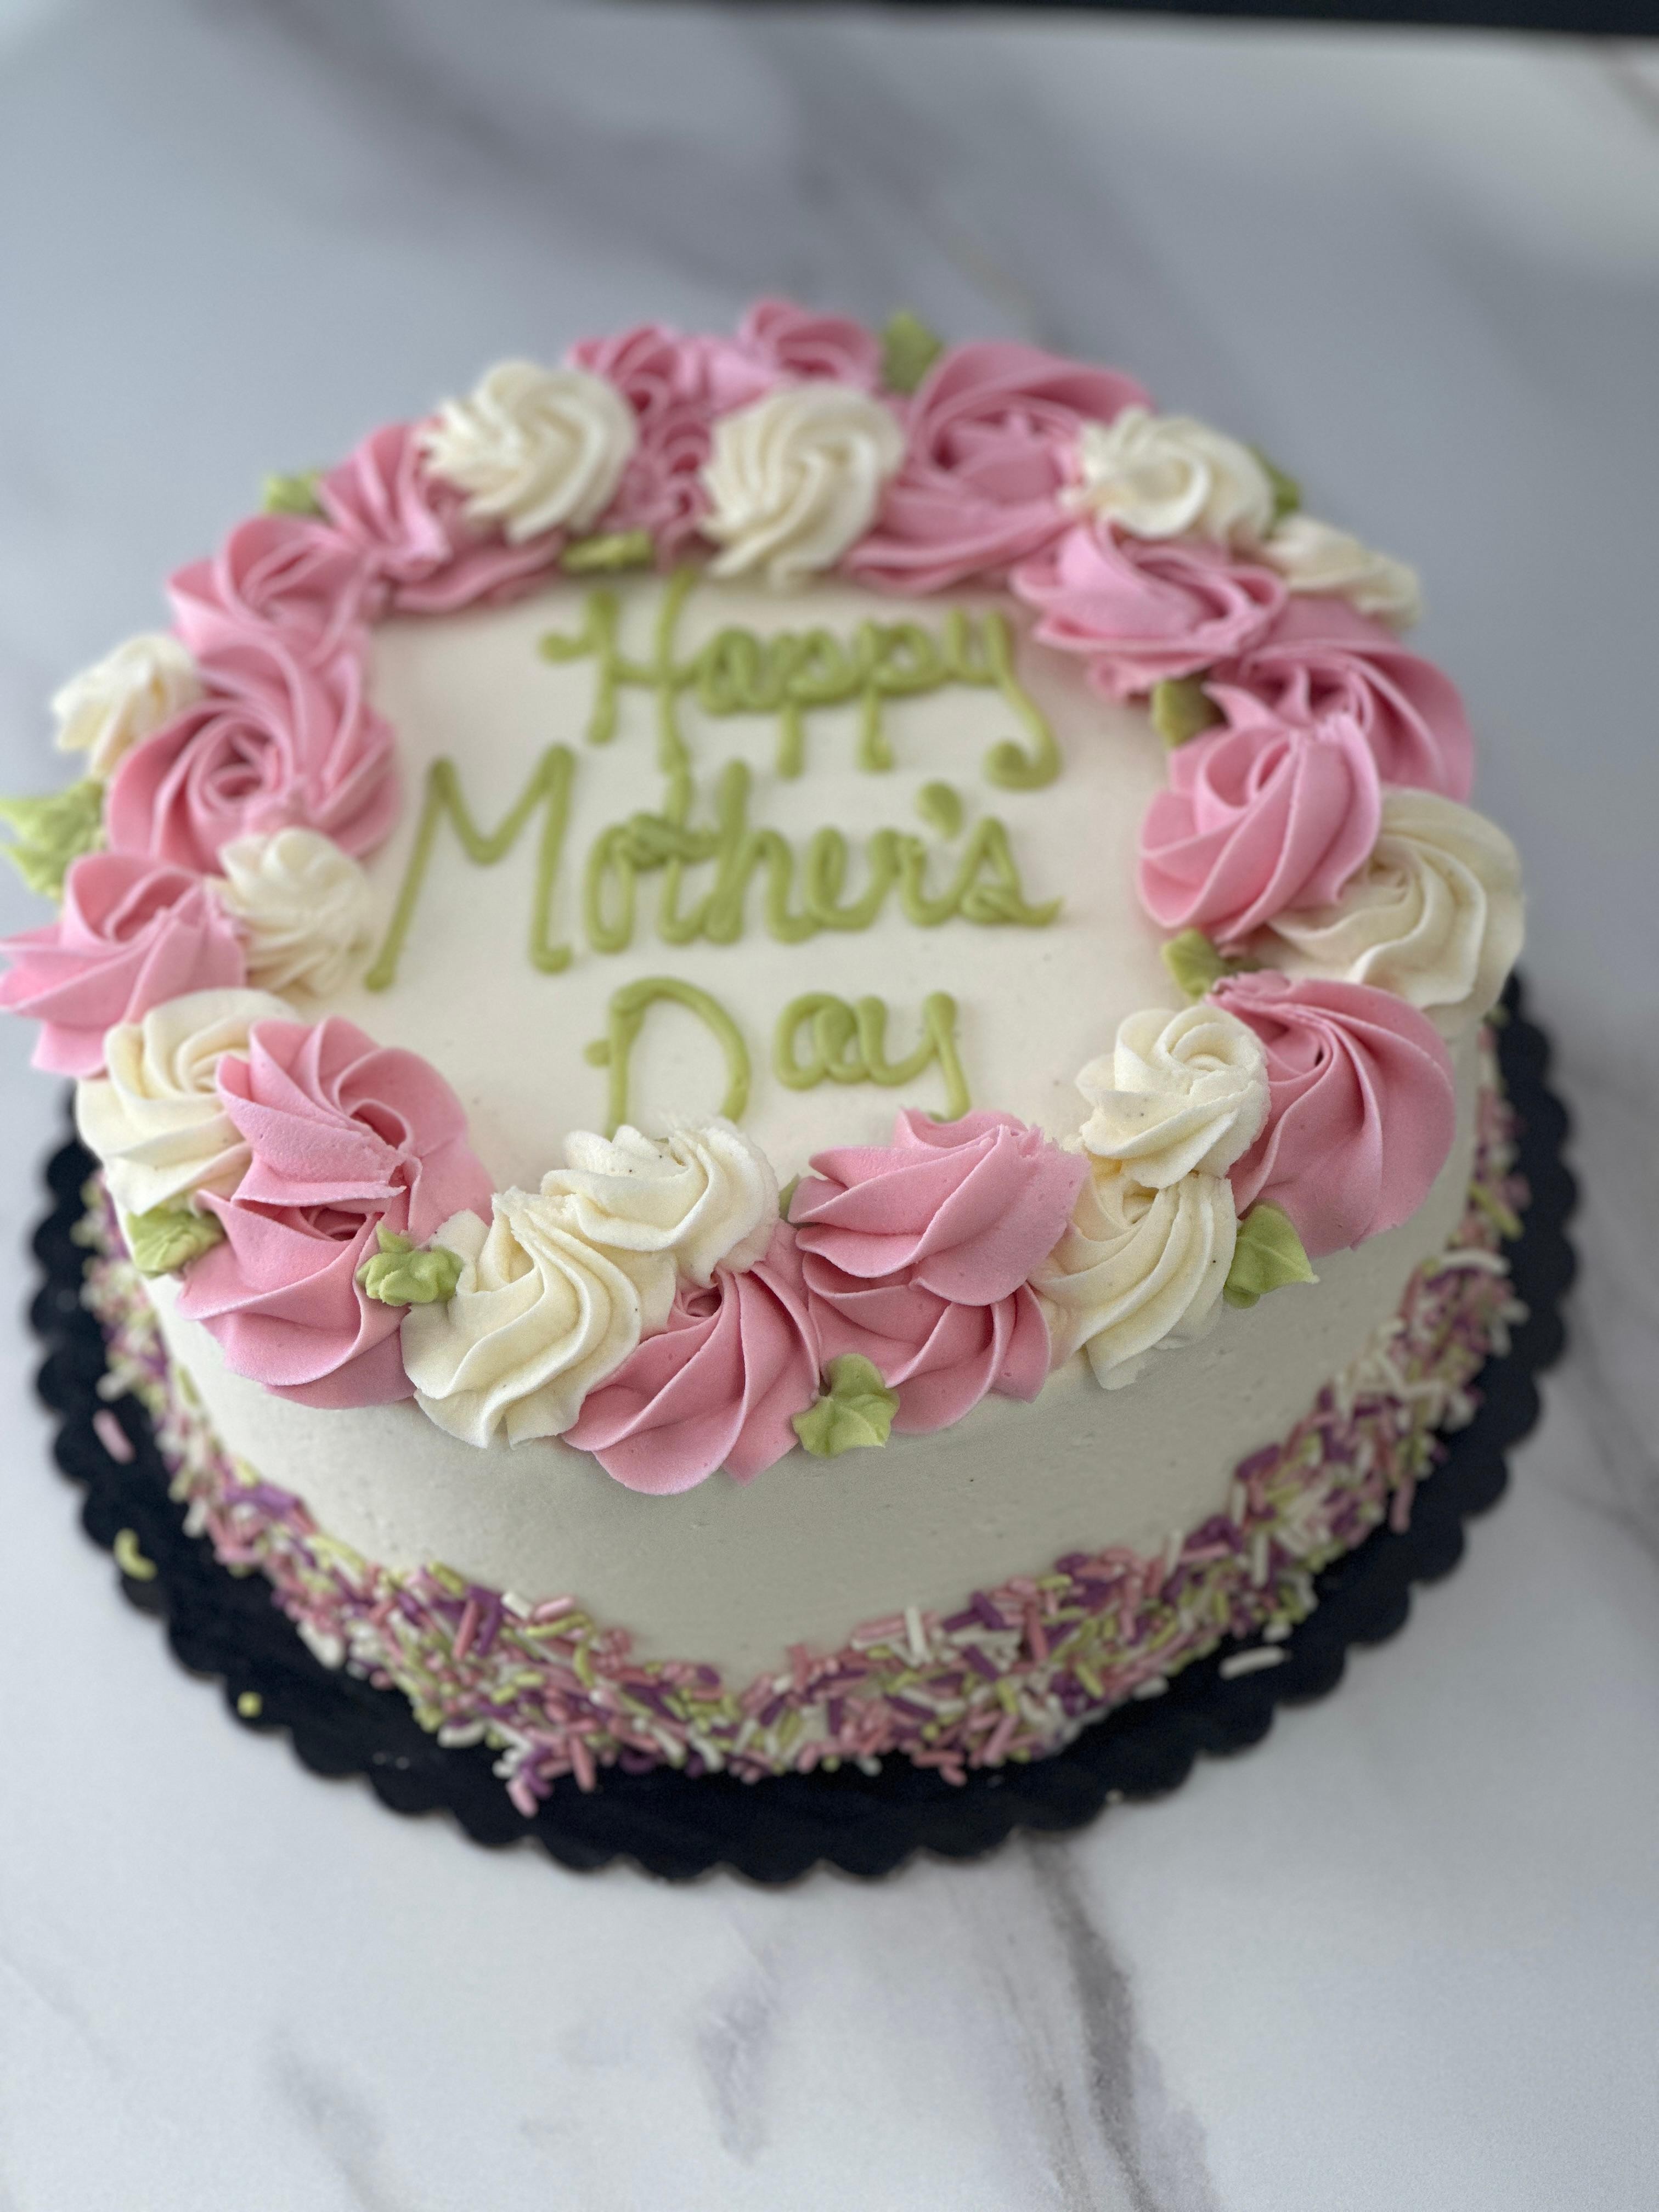 Mother's Day Cake - Vanilla